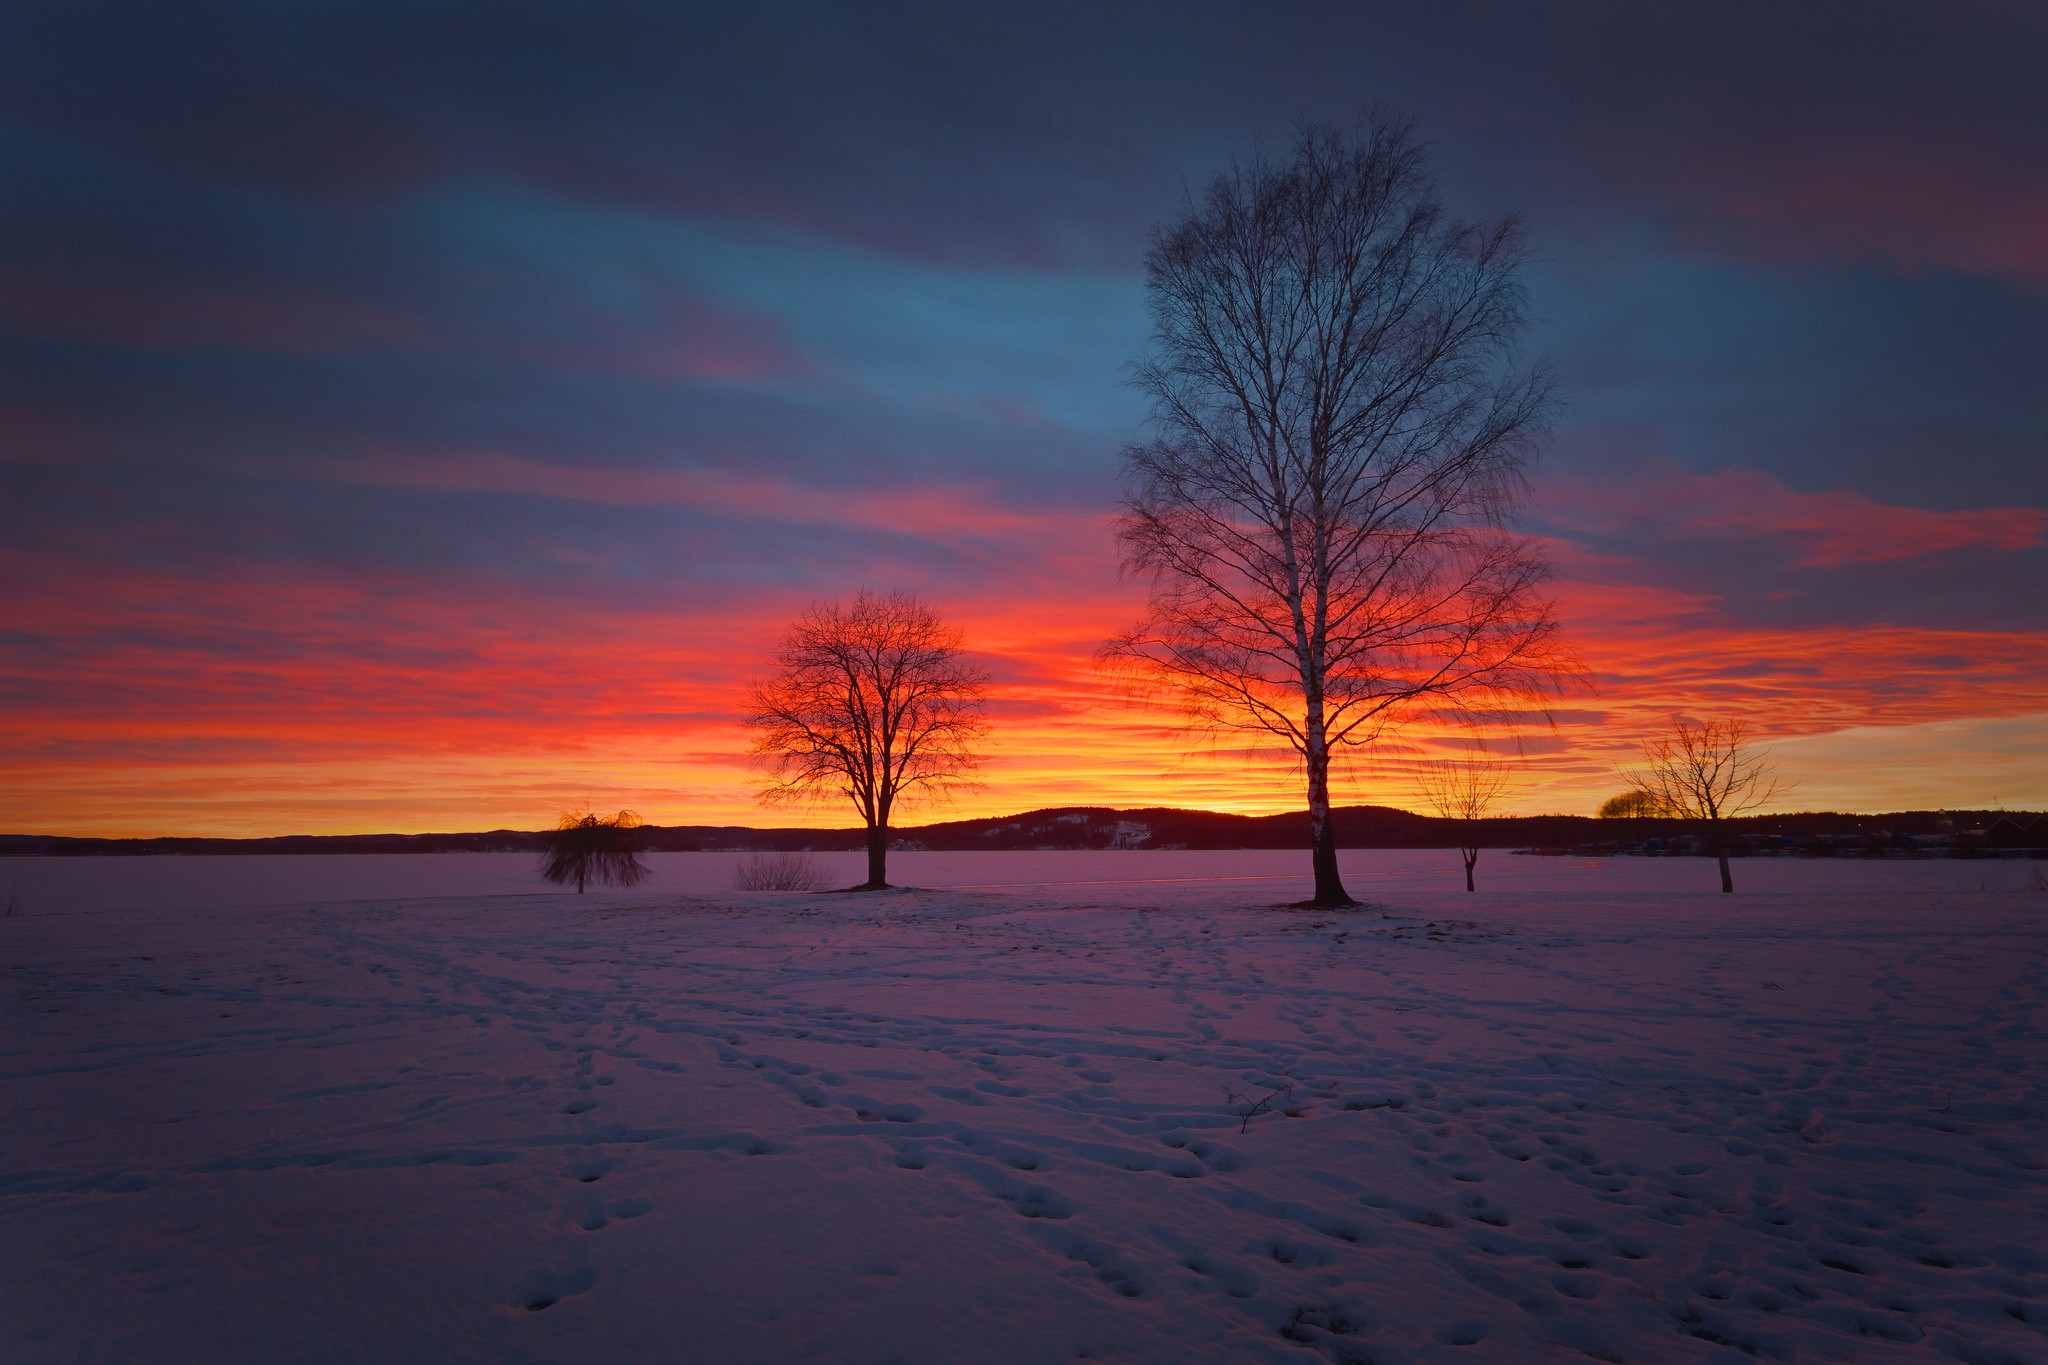 General 2048x1365 snow landscape trees birch skyscape purple sky sunset dusk winter orange sky sky cold outdoors